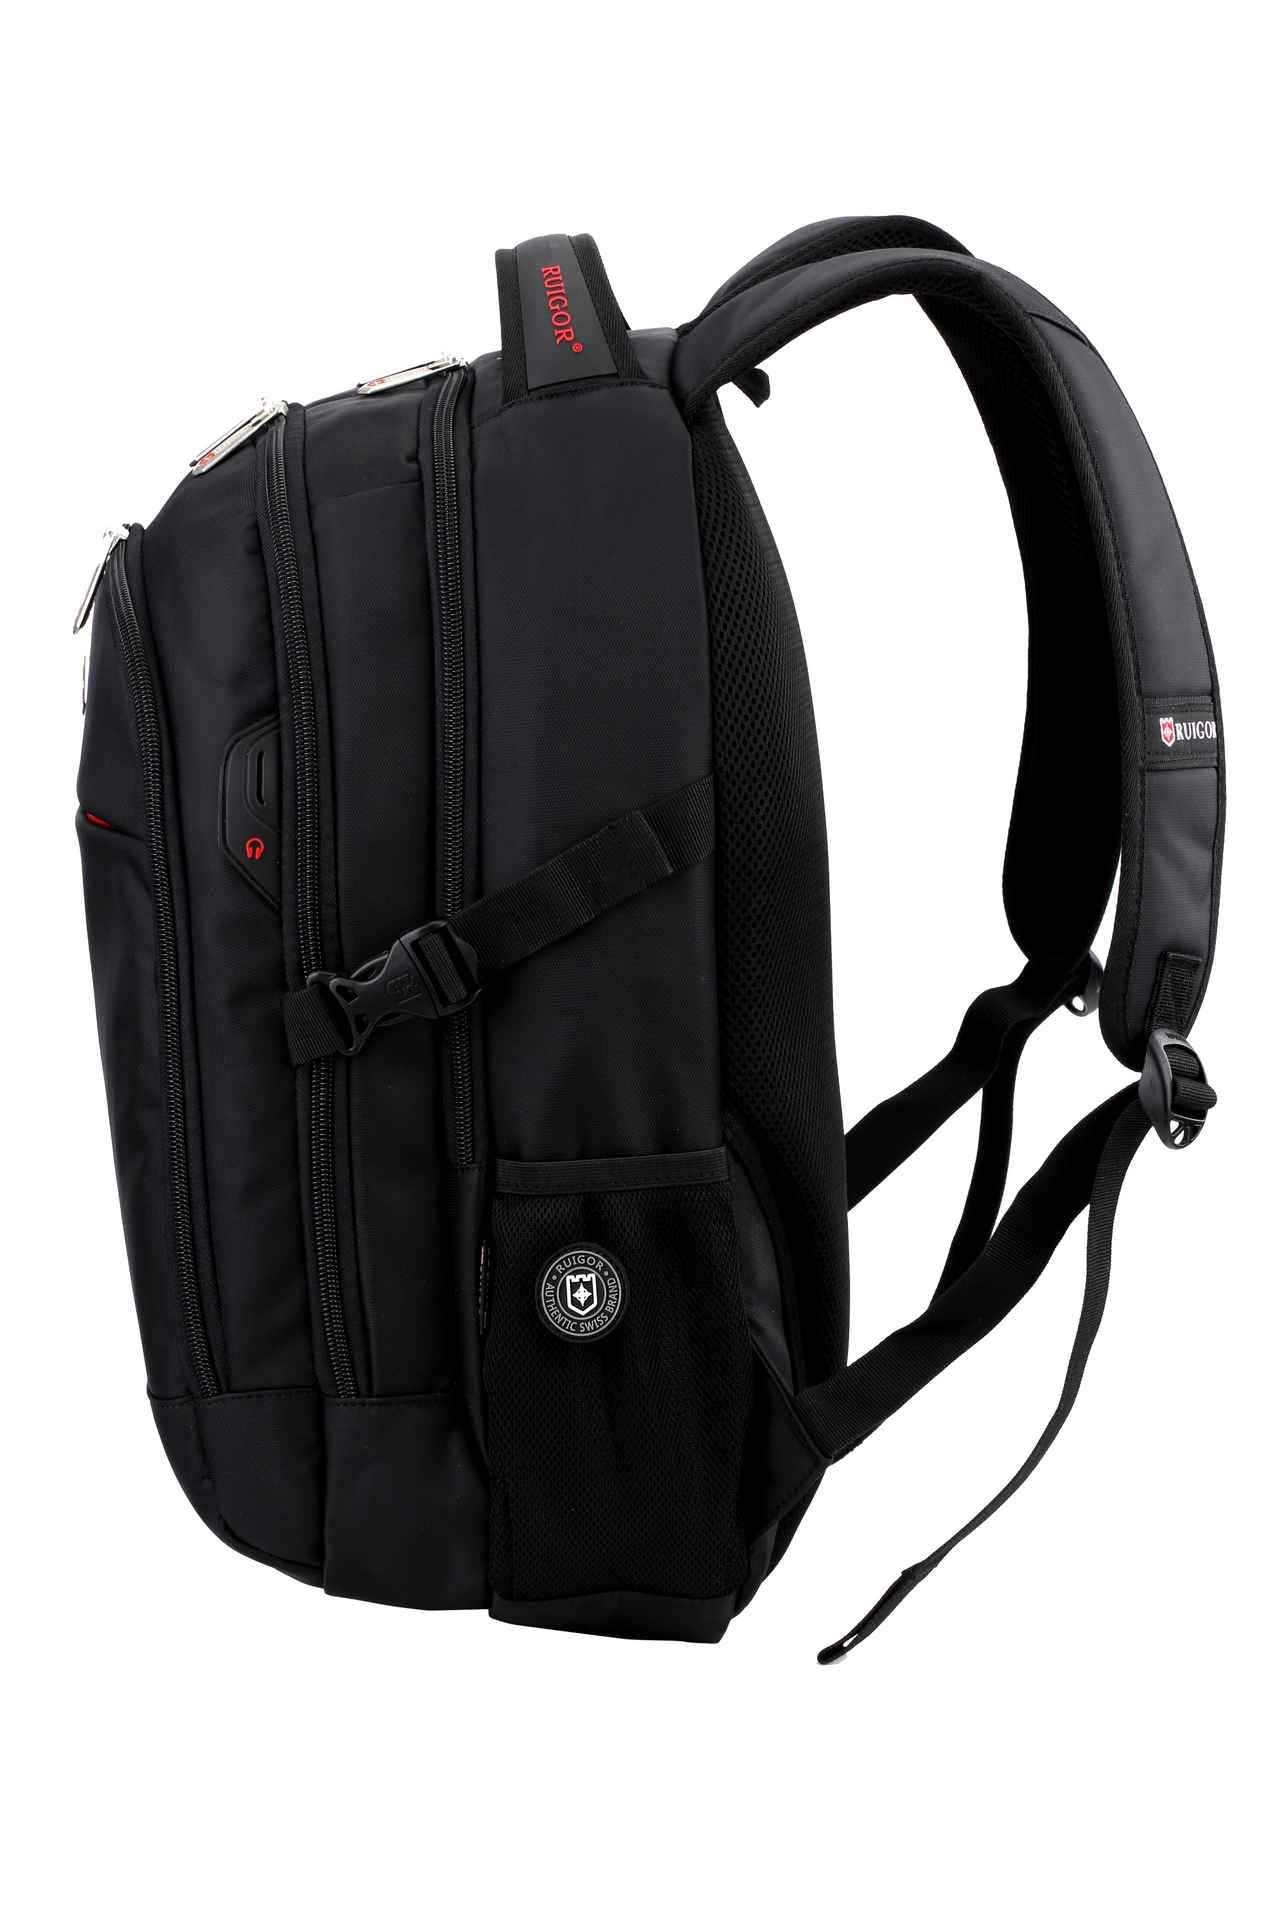 RUIGOR ICON 92 Laptop Backpack Black